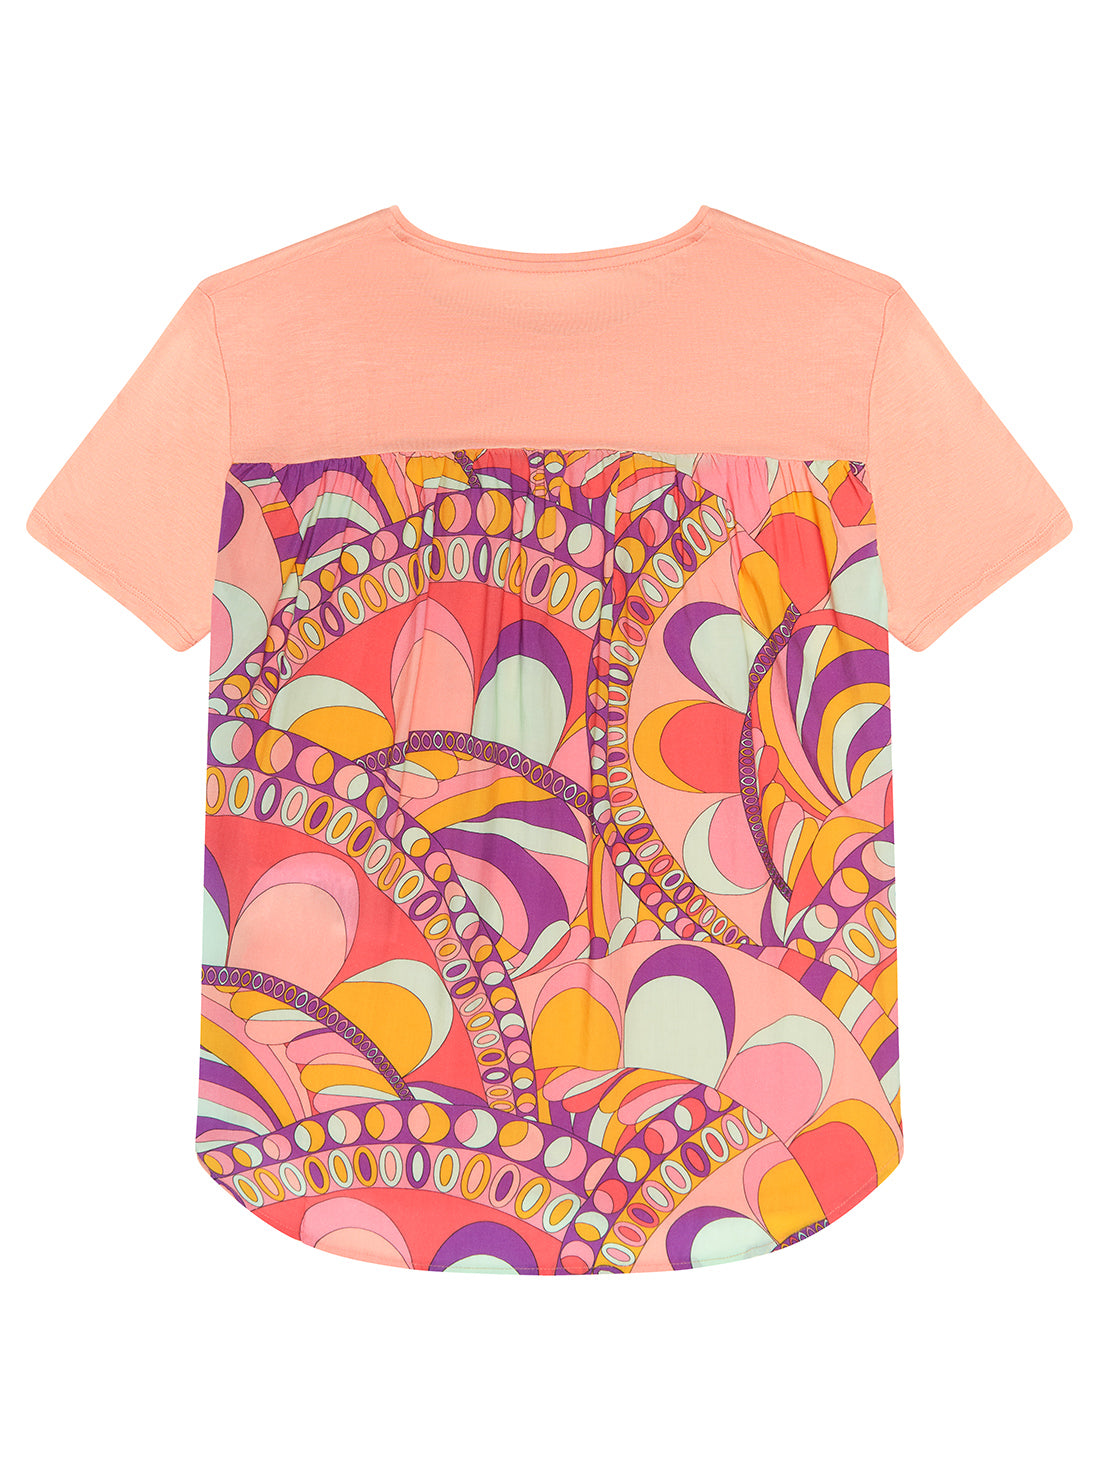 Women's Peach Circle Print T-Shirt (7-16) back view